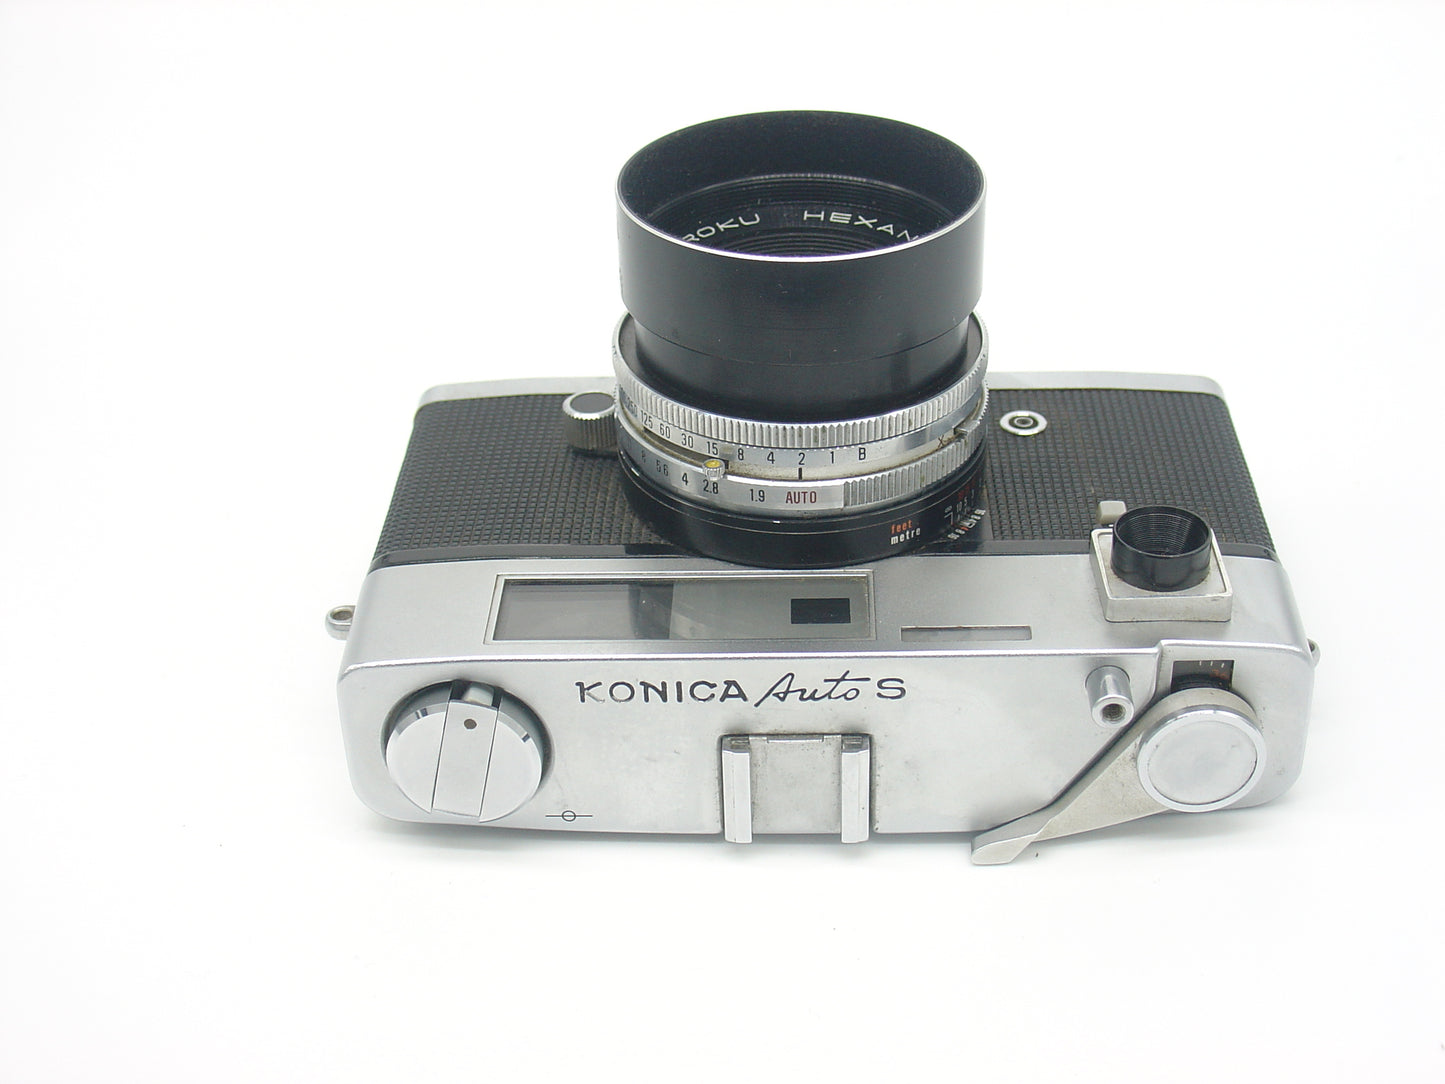 Konica Auto S rangefinder camera